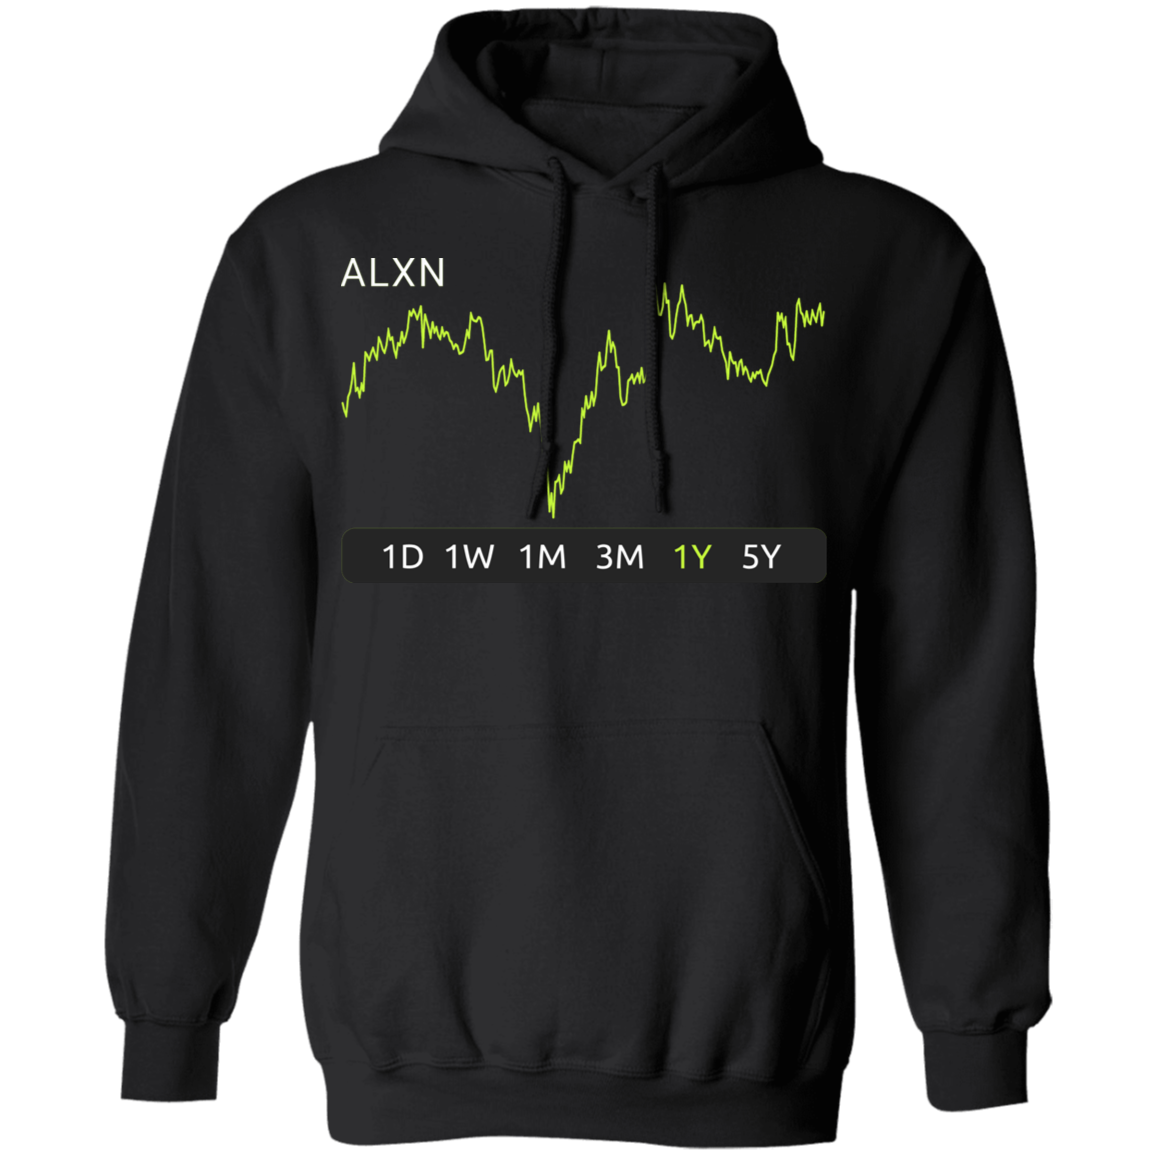 ALXN Stock 1y Pullover Hoodie